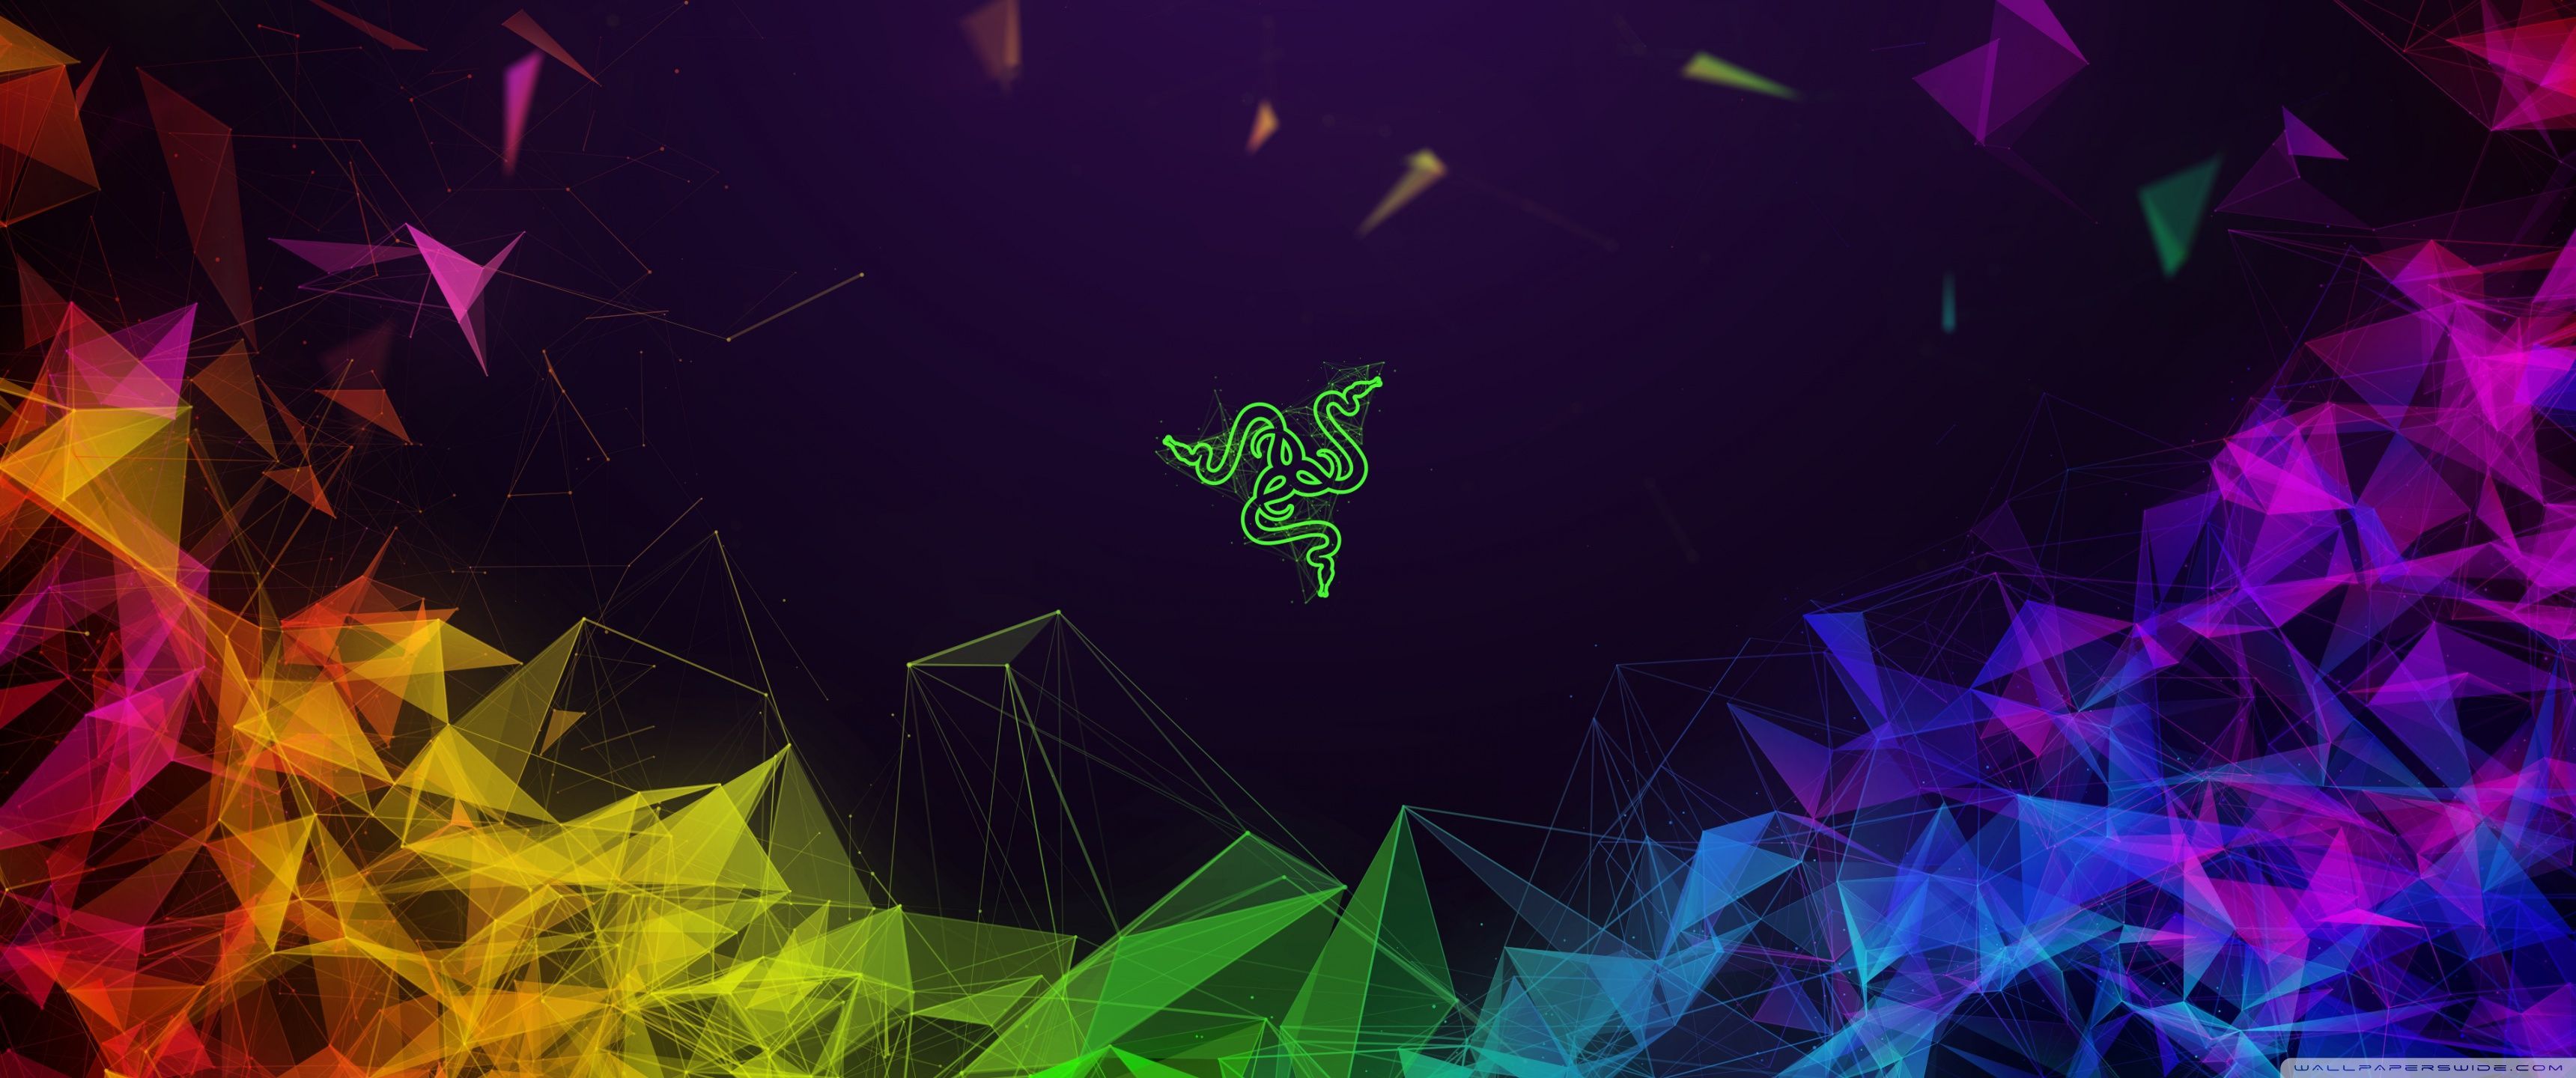 Razer logo on a colorful low poly background - 3440x1440